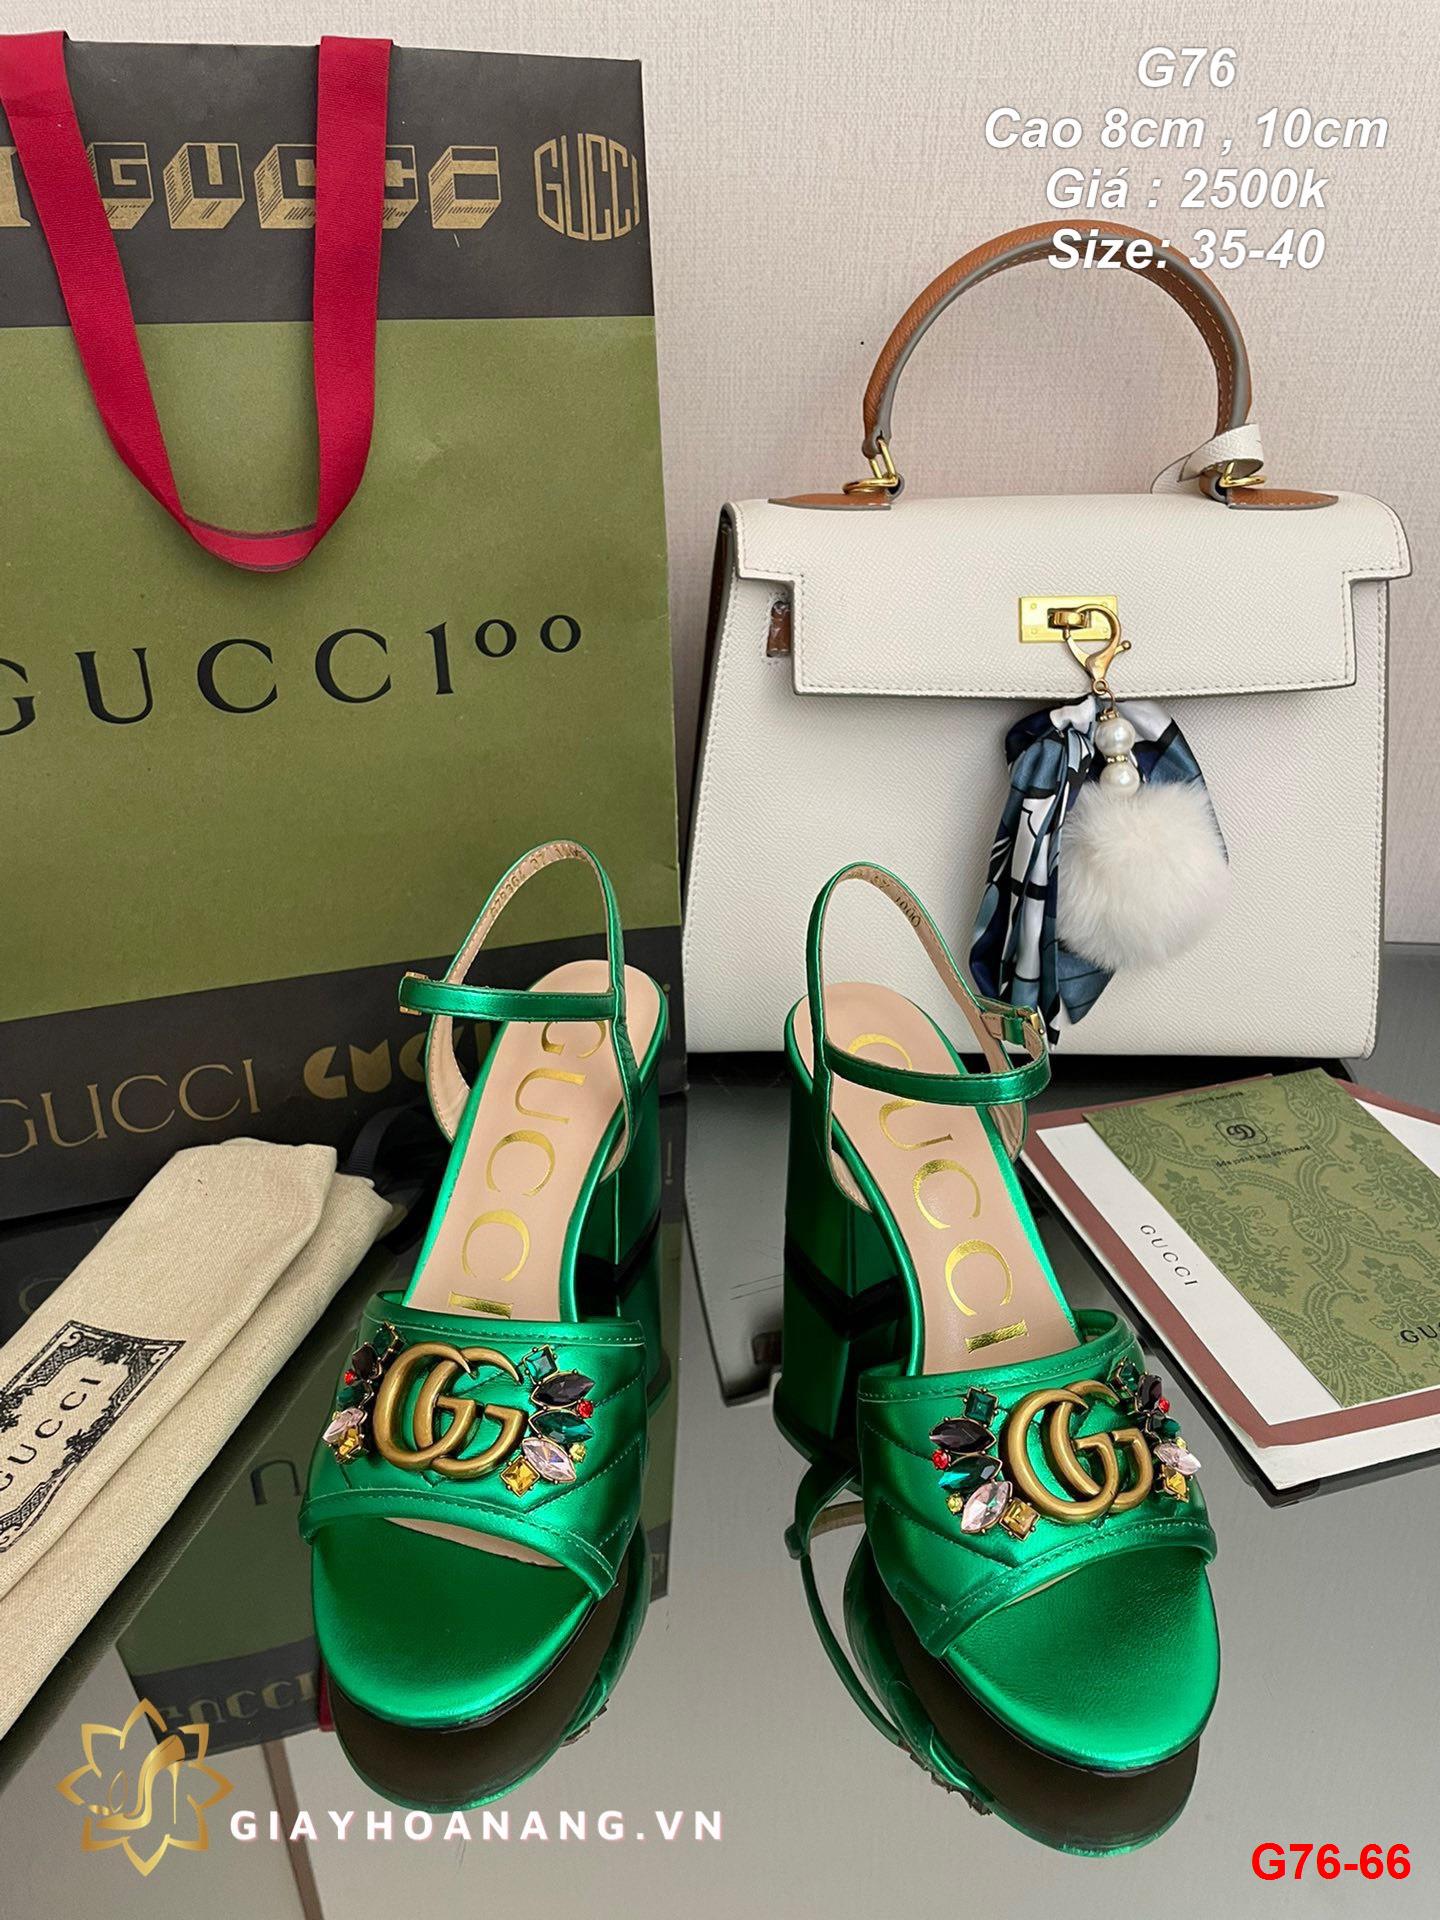 G76-66 Gucci sandal cao 8cm , 10cm siêu cấp